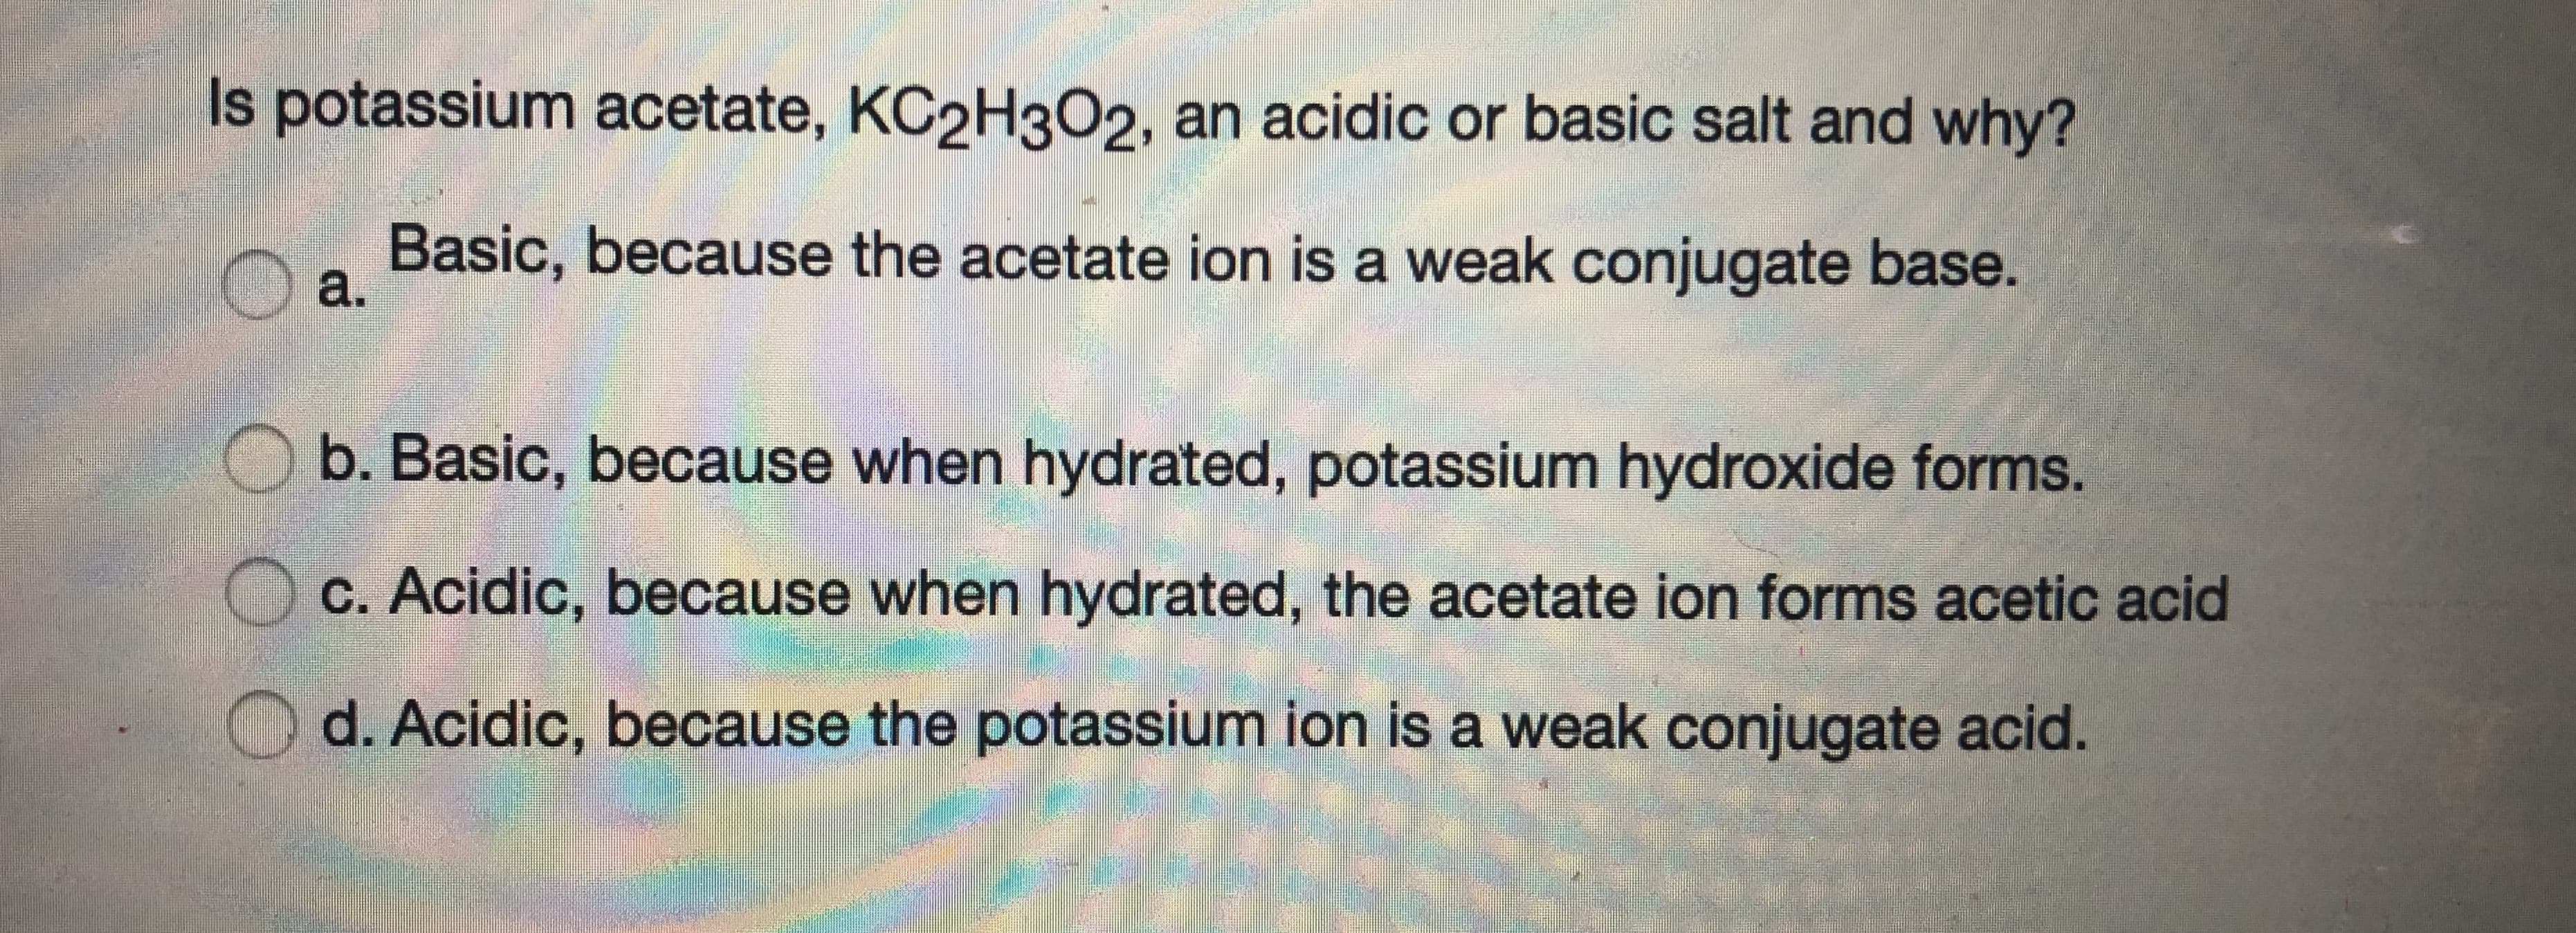 Is potassium acetate, KC2H3O2, an acidic or basic salt and why?
